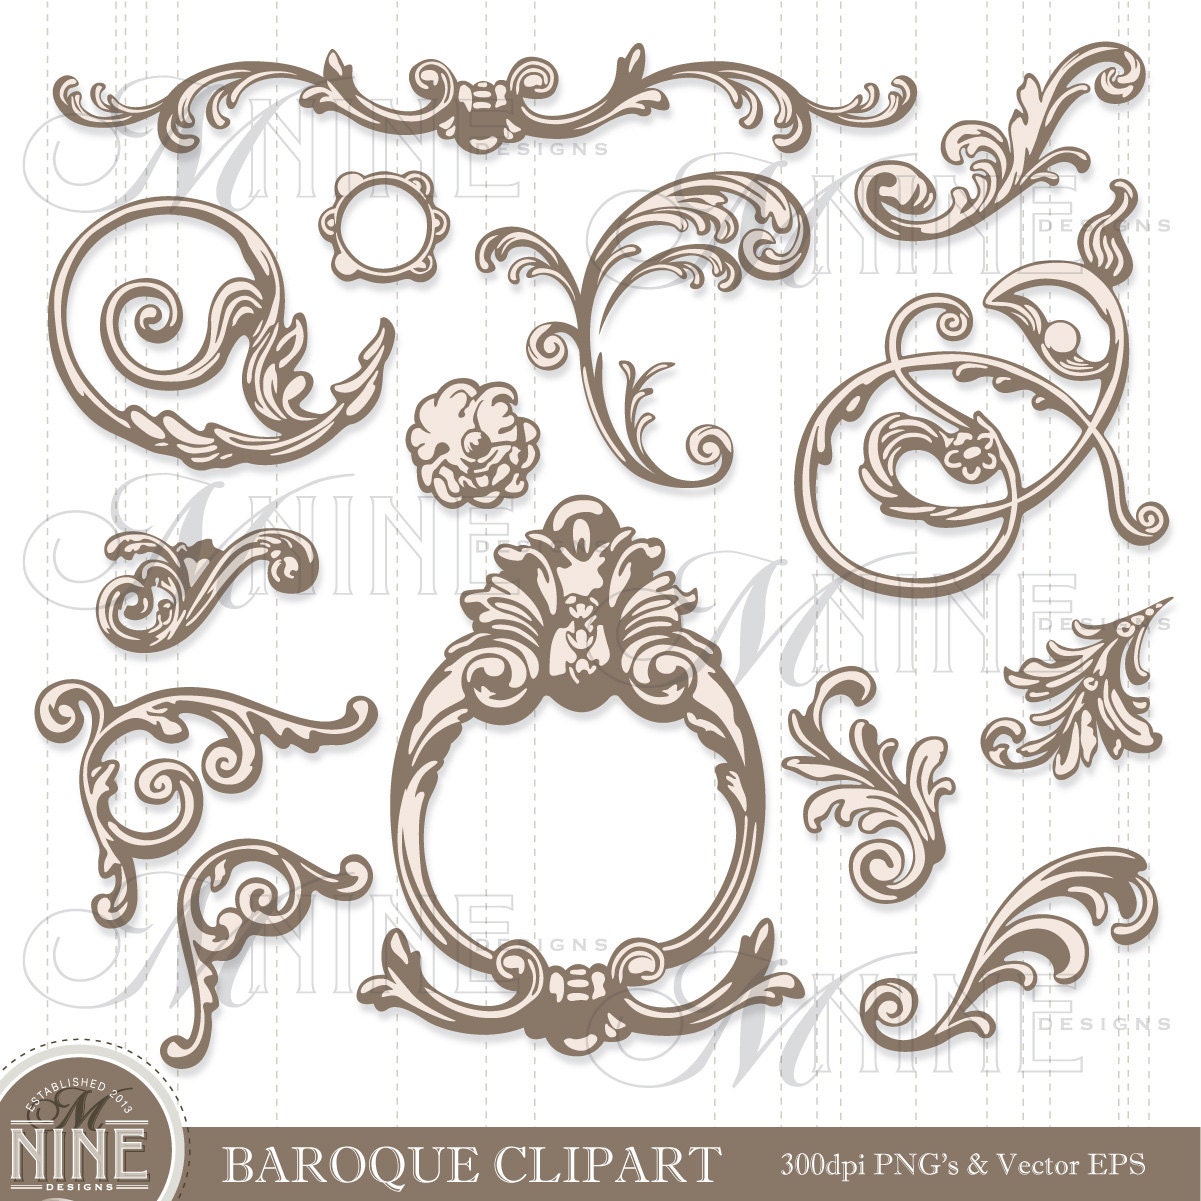 Baroque corners clipart Vintage black white decorative elements Digital download Floral ornaments Wedding Birthday Party Invitation